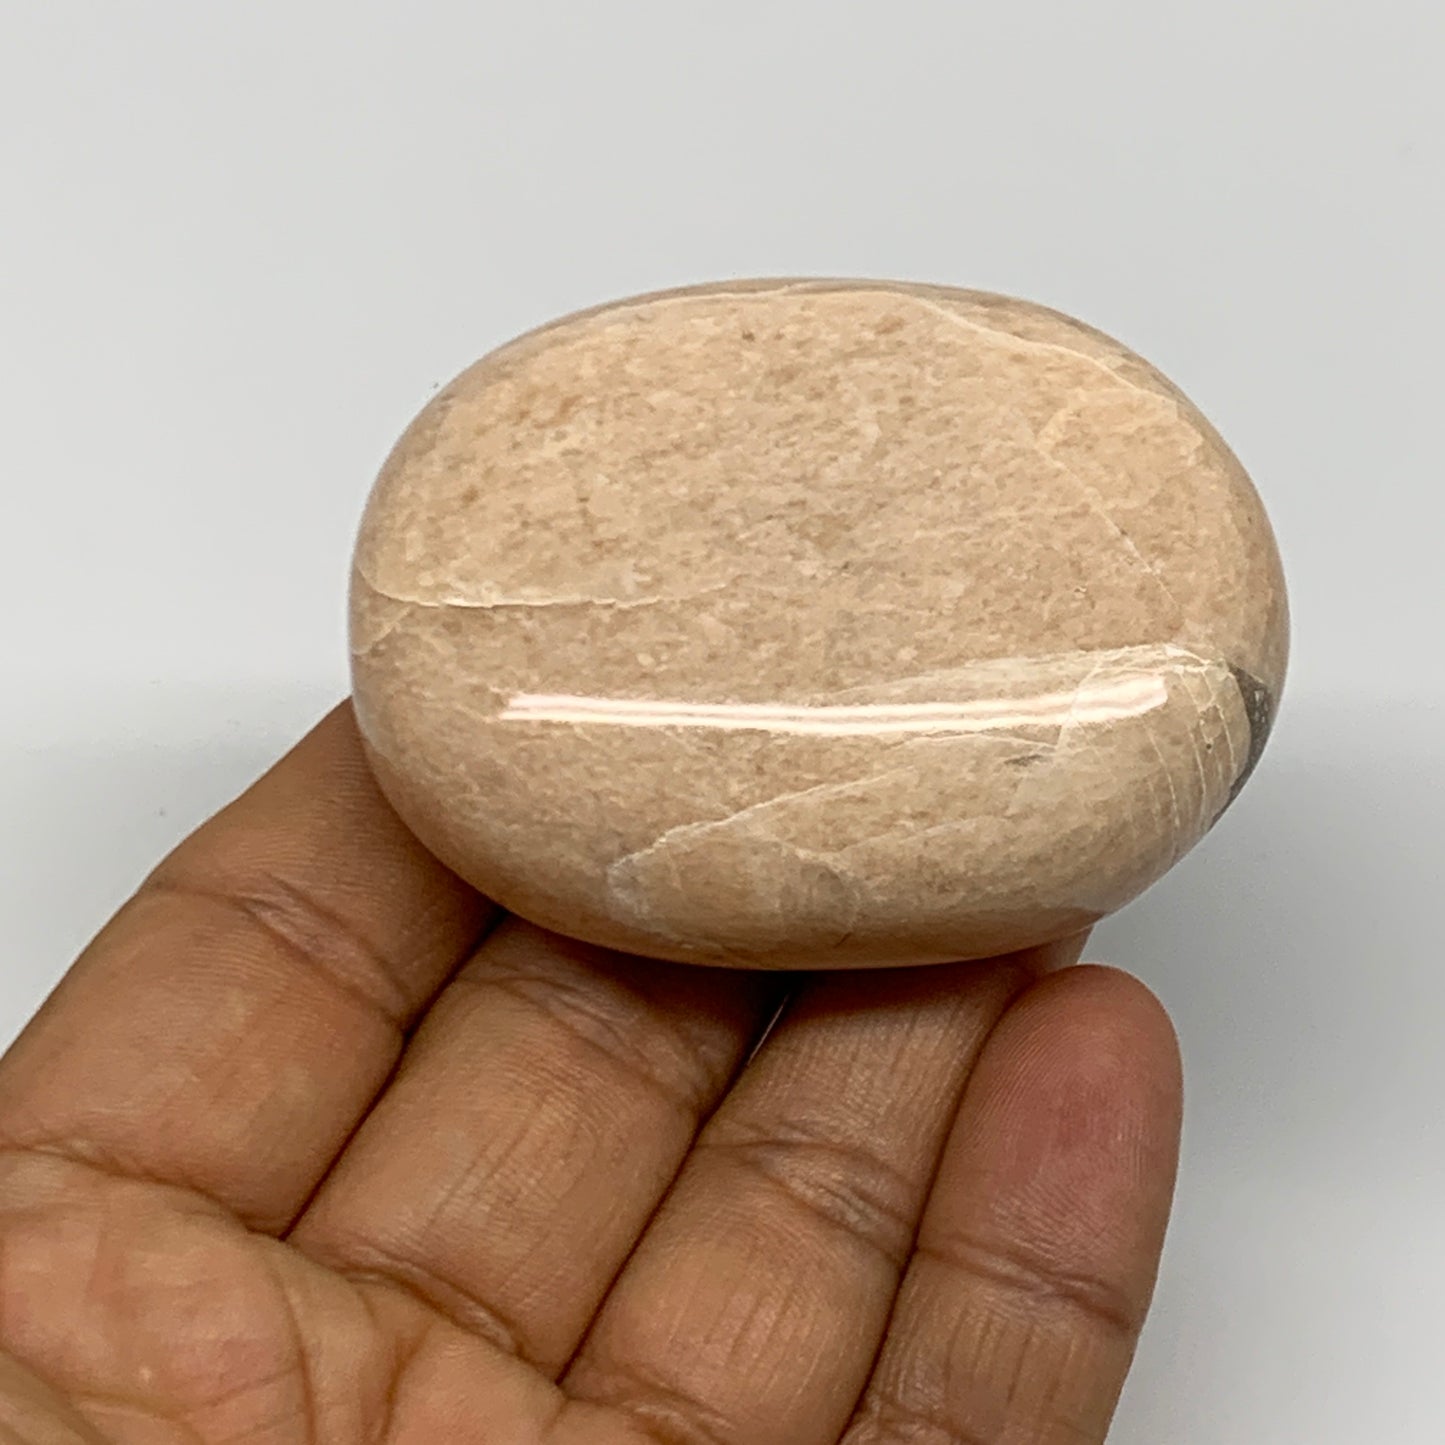 98.8g,2.3"x1.7"x0.9" Peach Moonstone Crystal Palm-Stone Polished Reiki, B27987